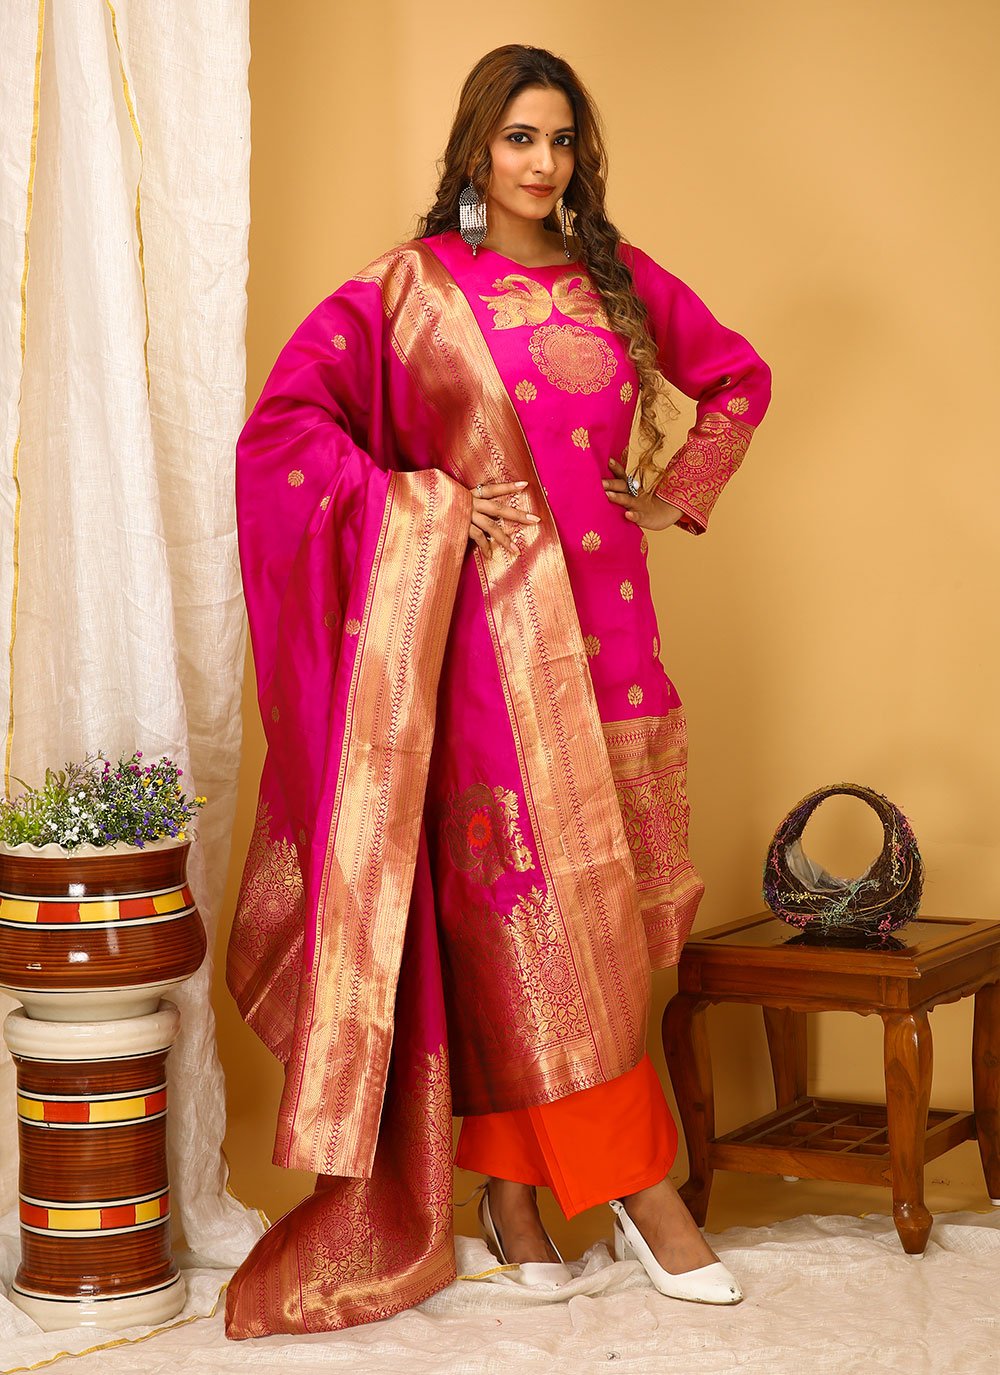 Fashionable Trend Of Salwar Suit And Saree Change With The Time - Amar  Ujala Hindi News Live - फैशन में हुए बड़े बदलाव ने सलवार सूट-साड़ी को किया  आउट, इस आउटफिट ने